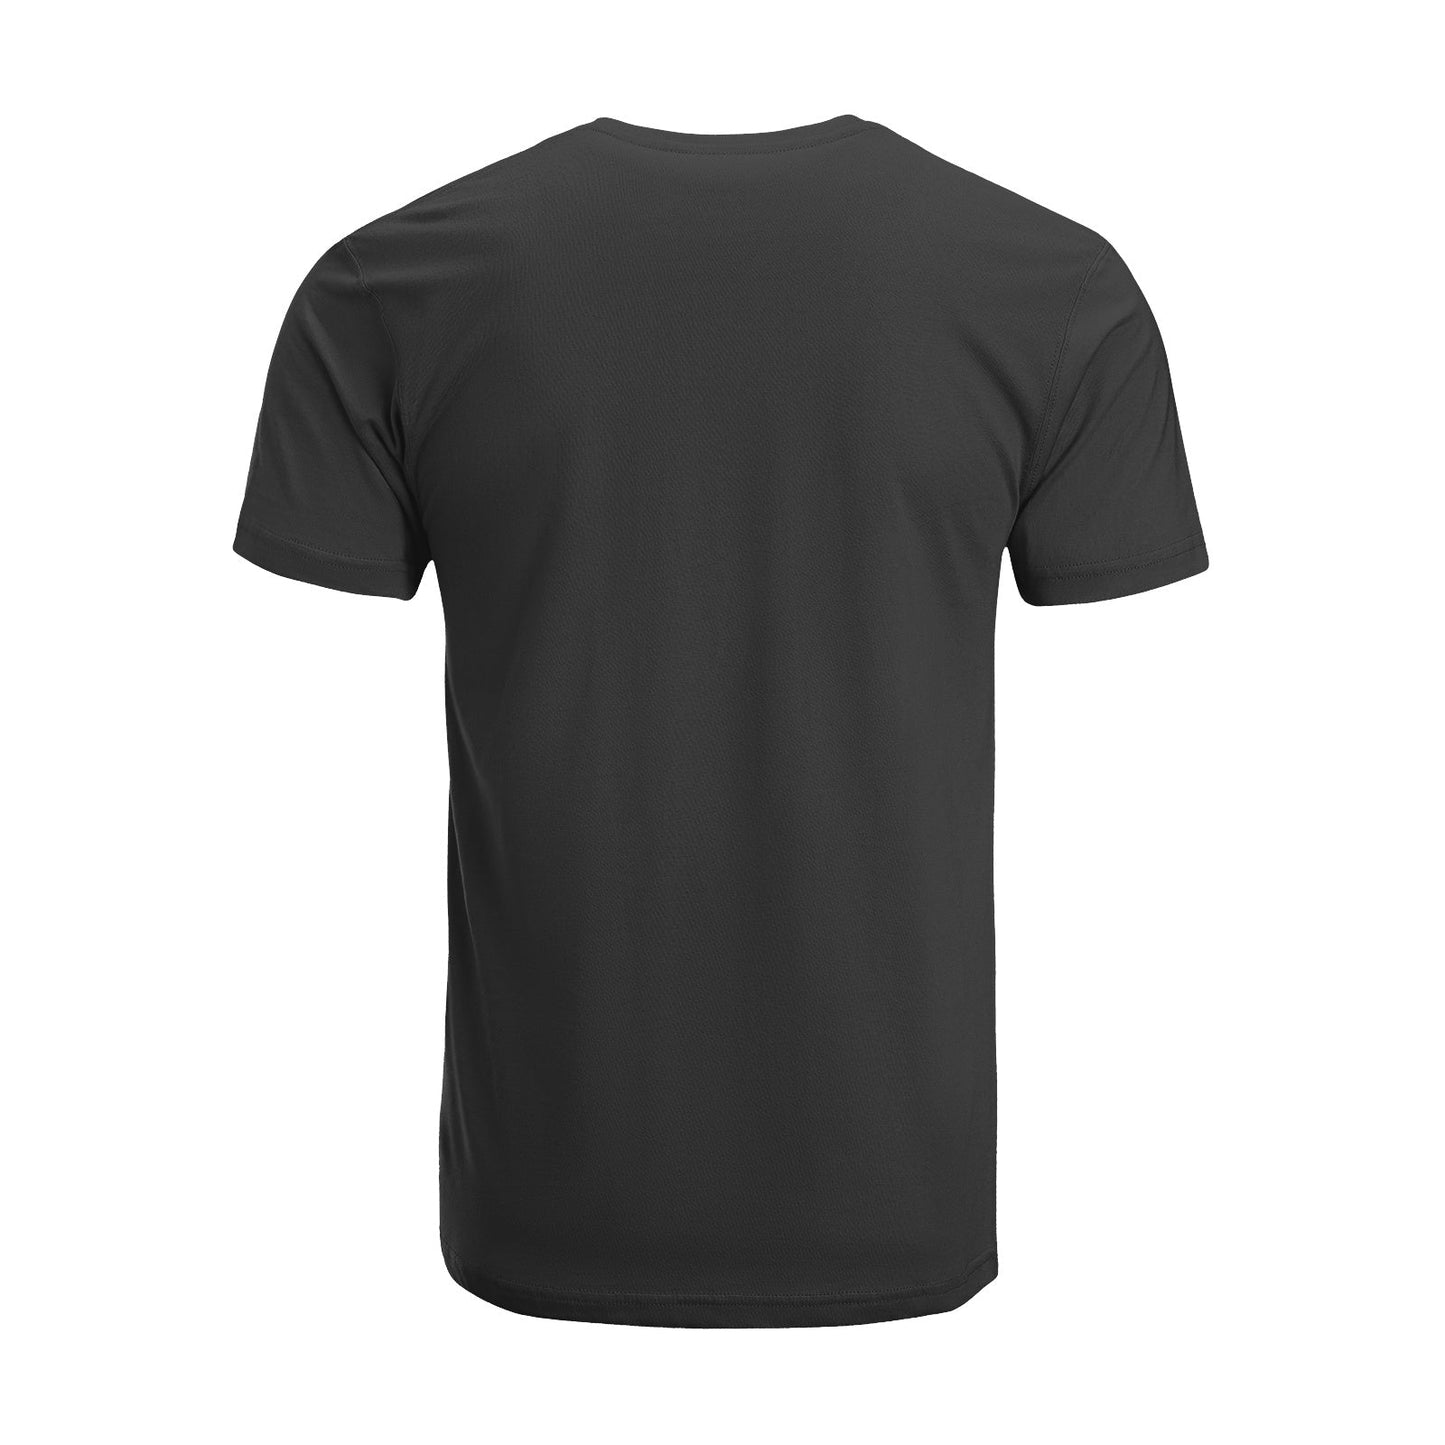 Unisex Short Sleeve Crew Neck Cotton Jersey T-Shirt Gym No. 50 - Tara-Outfits.com